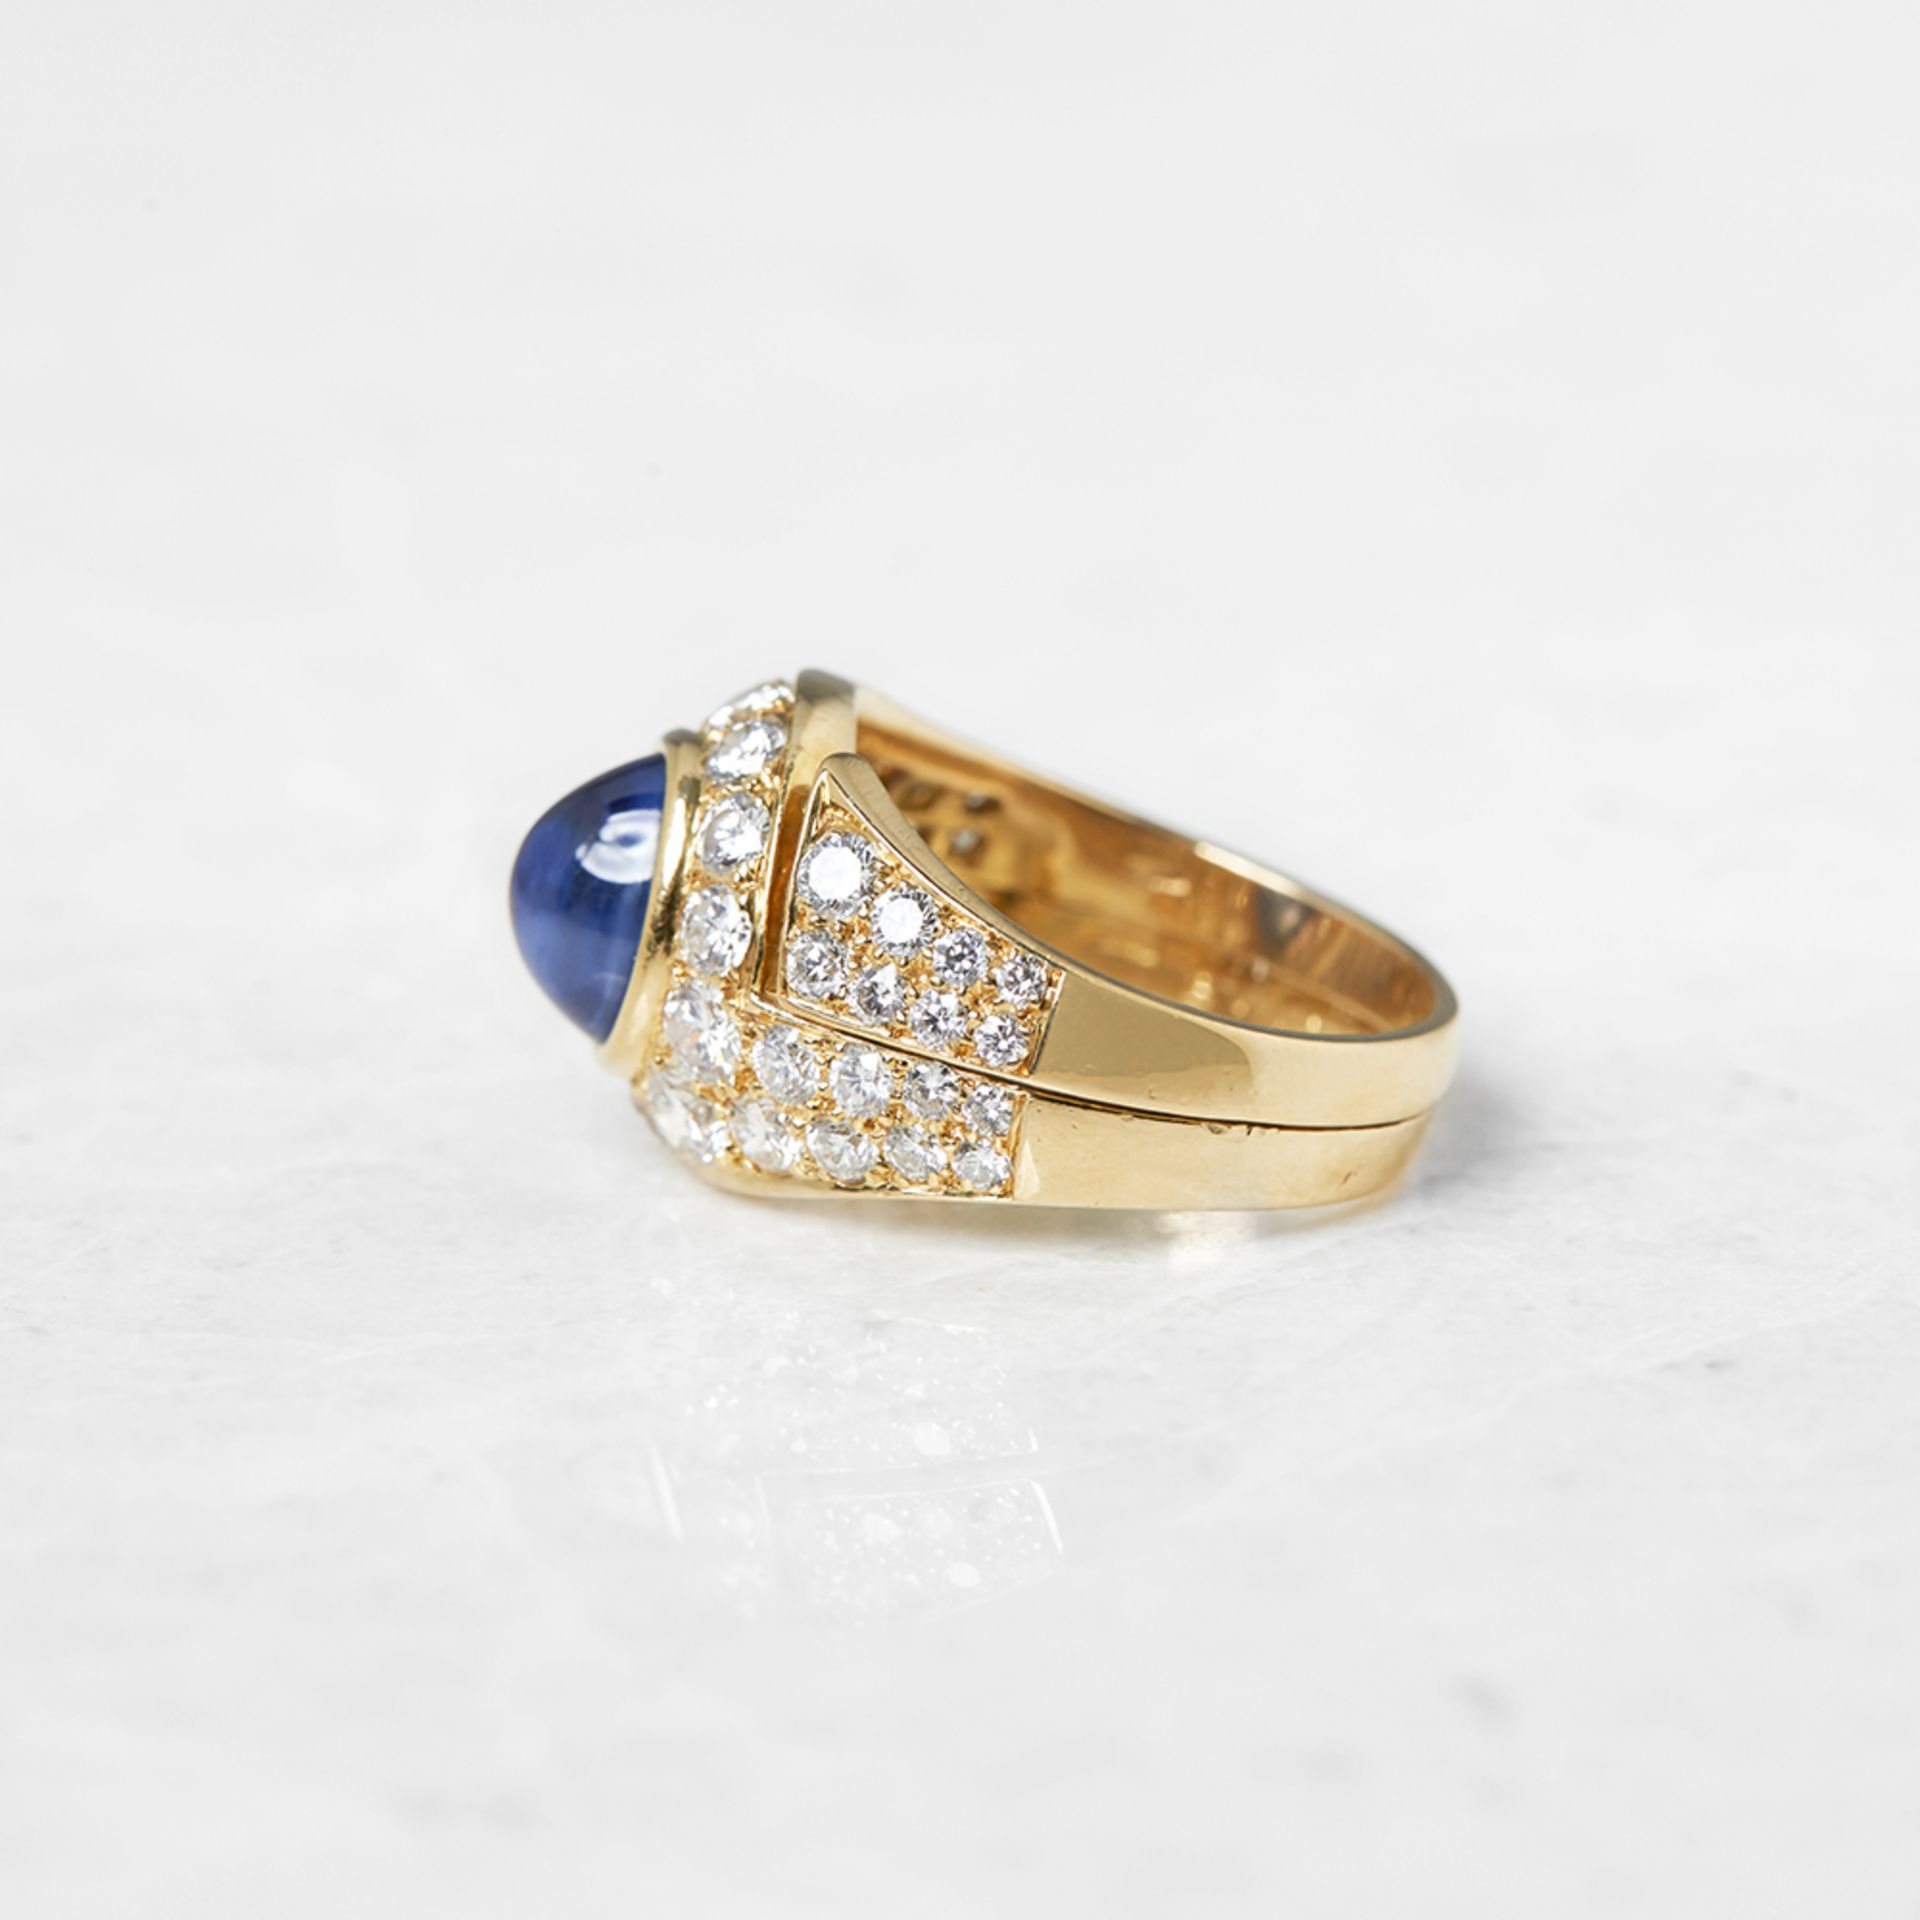 Bulgari 18k Yellow Gold 2.10ct Cabochon Sapphire & 1.75ct Diamond Ring with Bulgari Box - Image 4 of 8